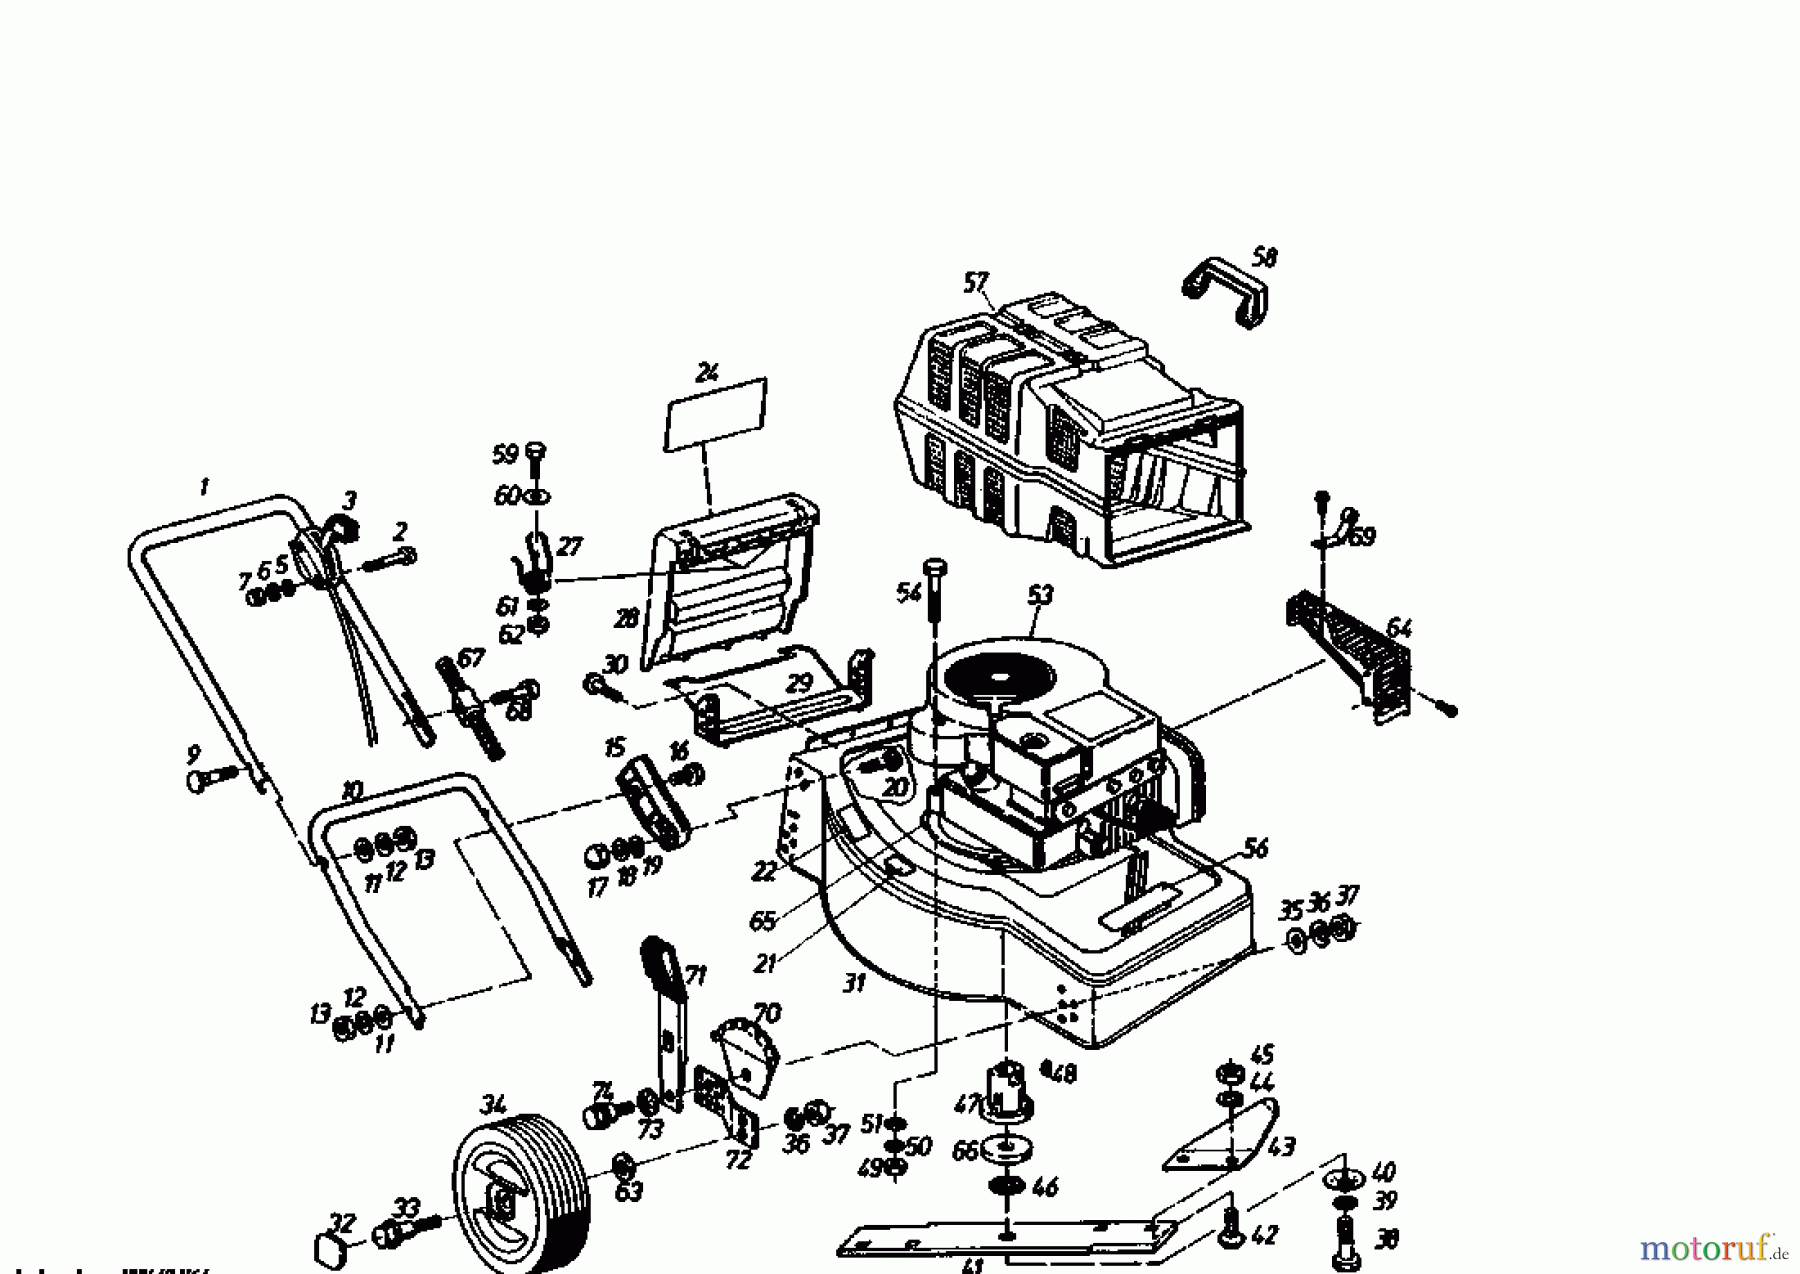  Golf Petrol mower HB-BS 02880.05  (1987) Basic machine